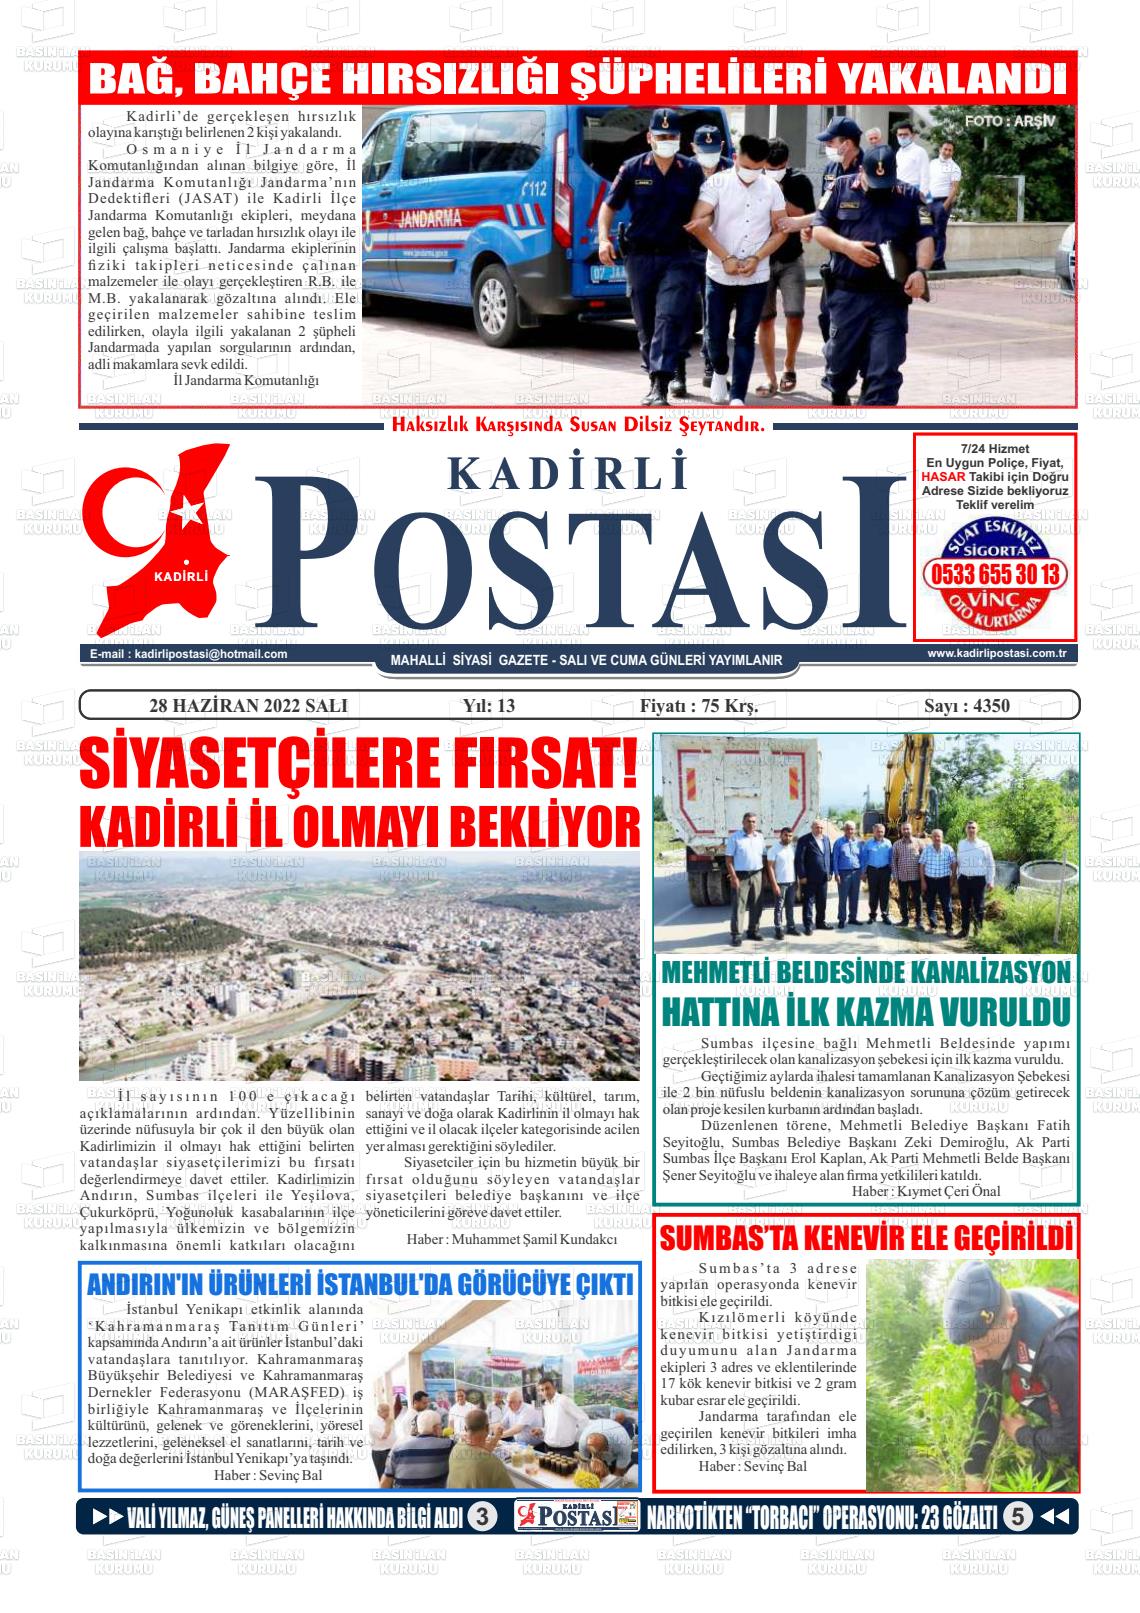 28 Haziran 2022 Kadirli Postası Gazete Manşeti